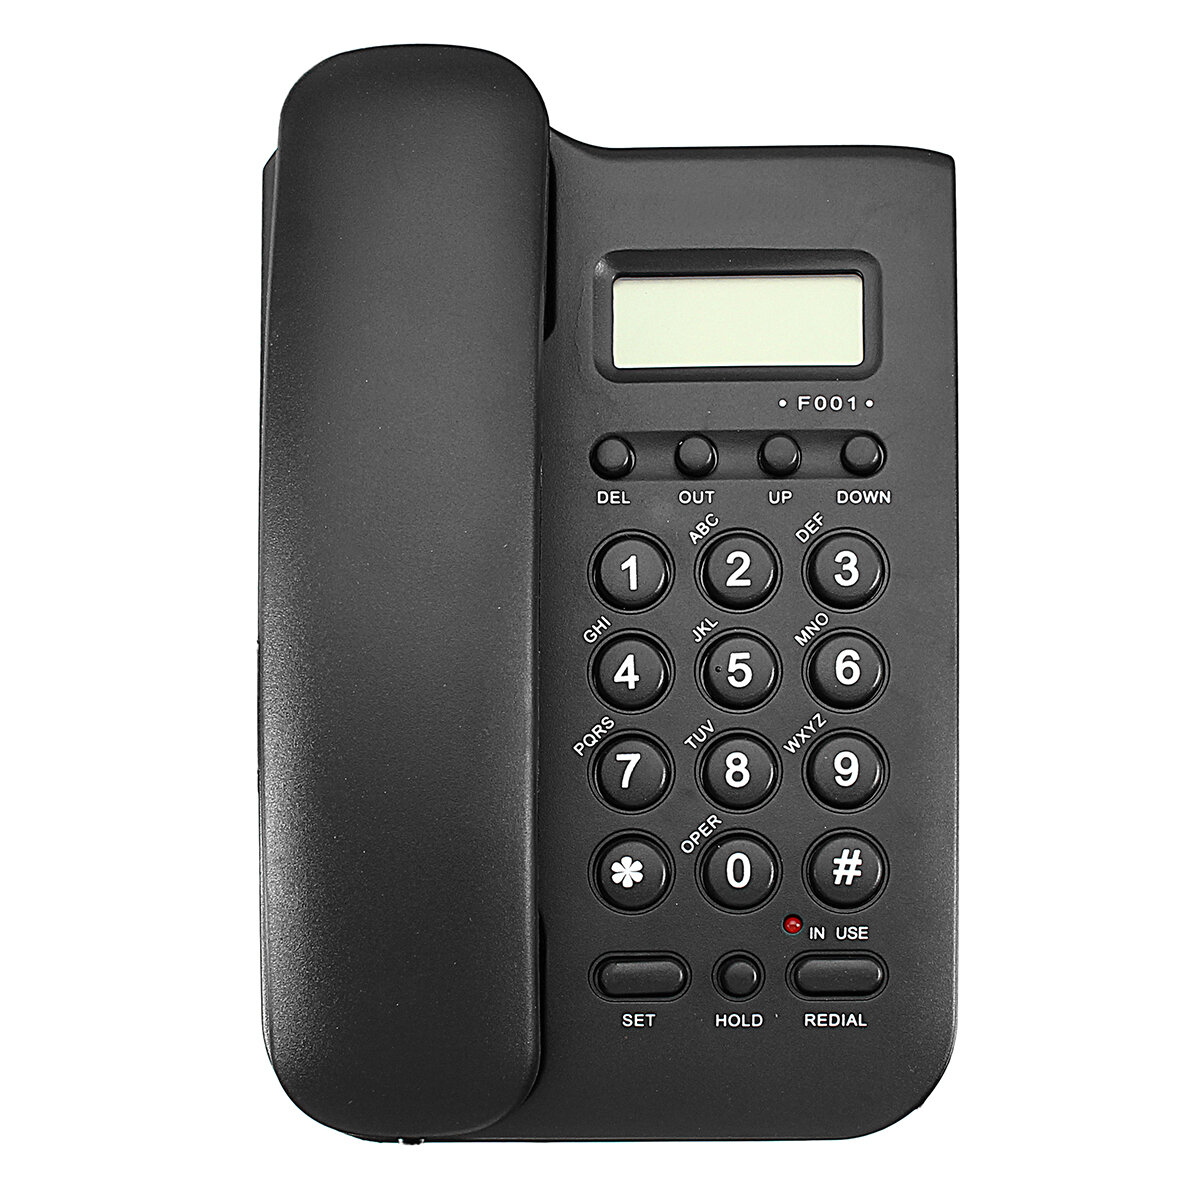 

Wall Mount Telephone Desktop Corded Phone Caller Home Office Landline Black